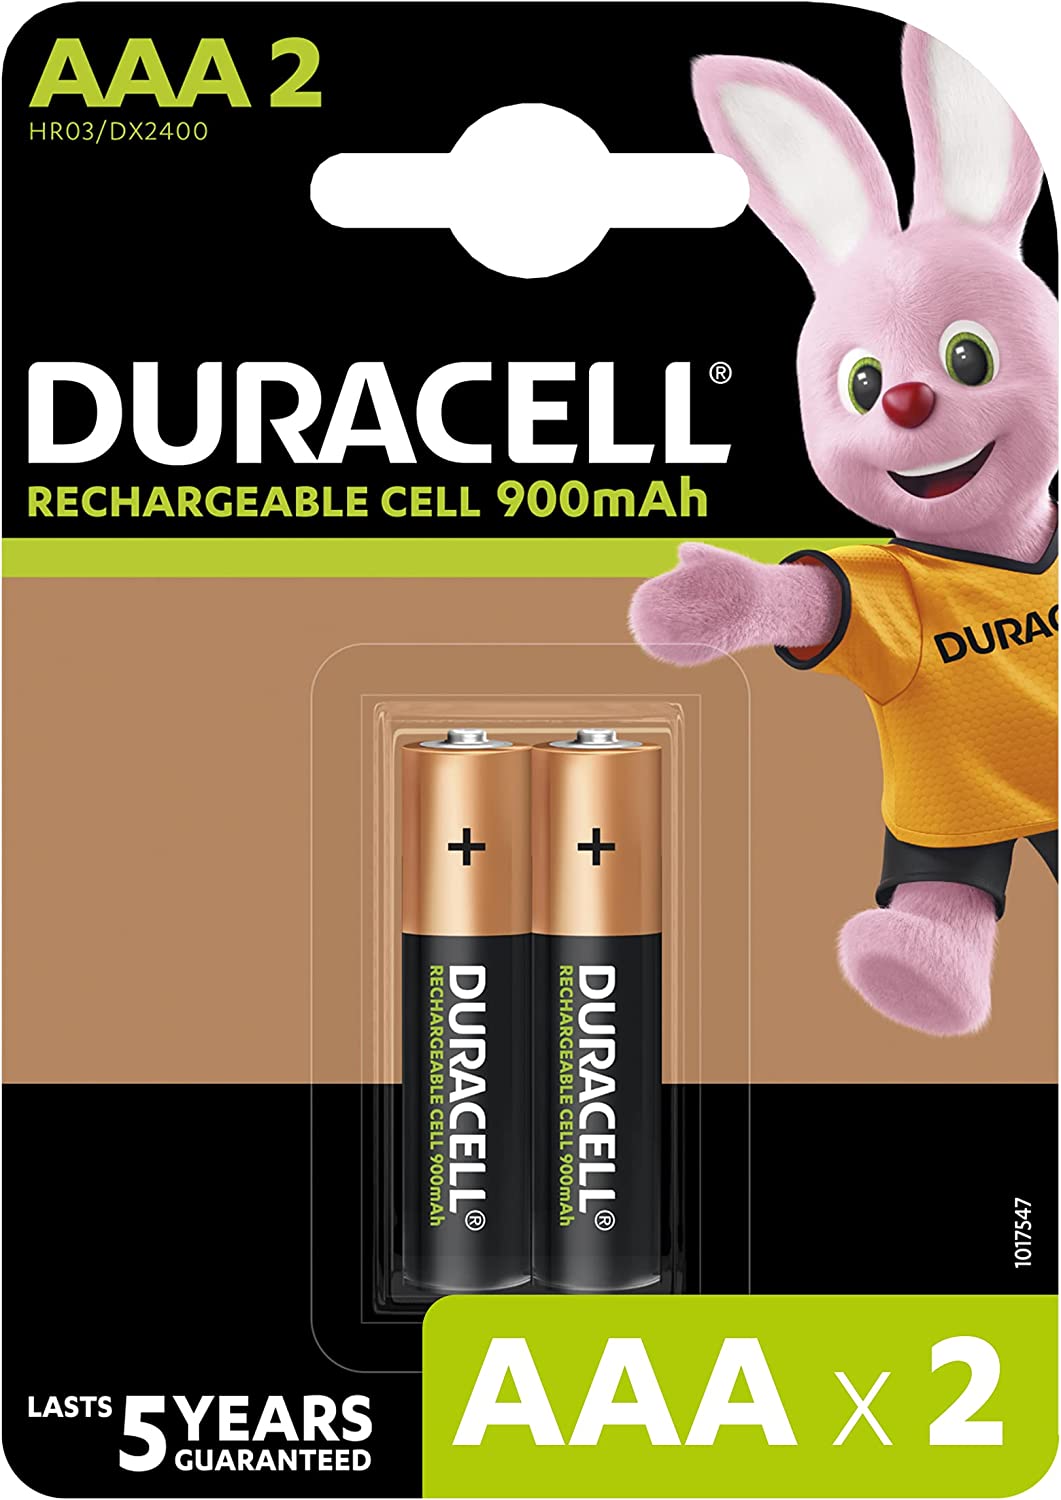 Duracel Rechargeable AAA Micro, 1.2V Akku Batterie, 900mAh, 2er-Pack